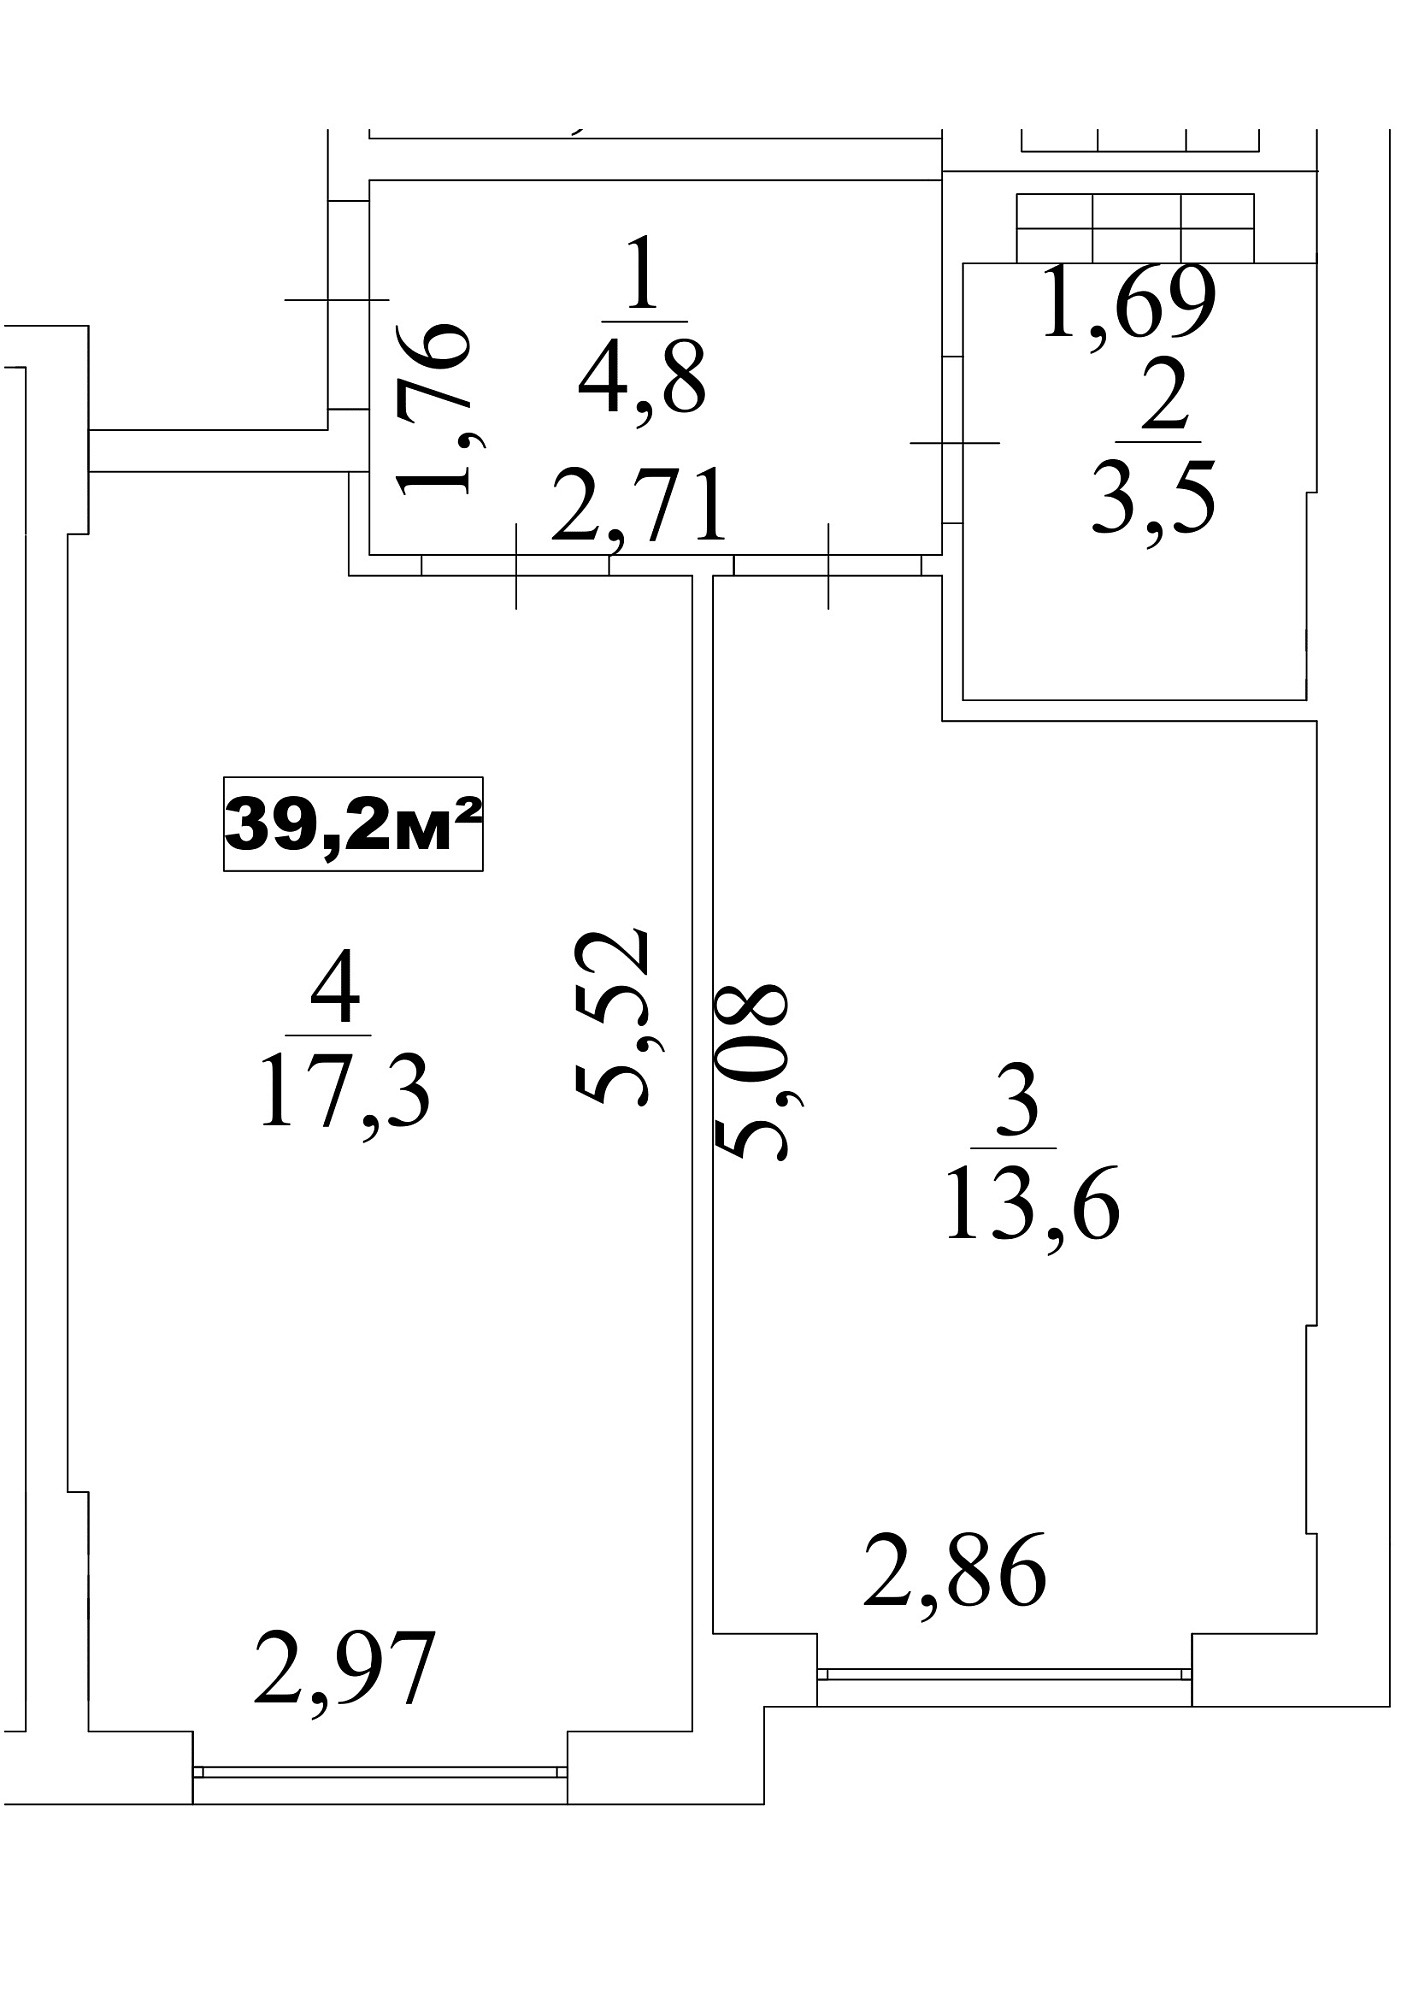 Planning 1-rm flats area 39.2m2, AB-10-10/0088в.